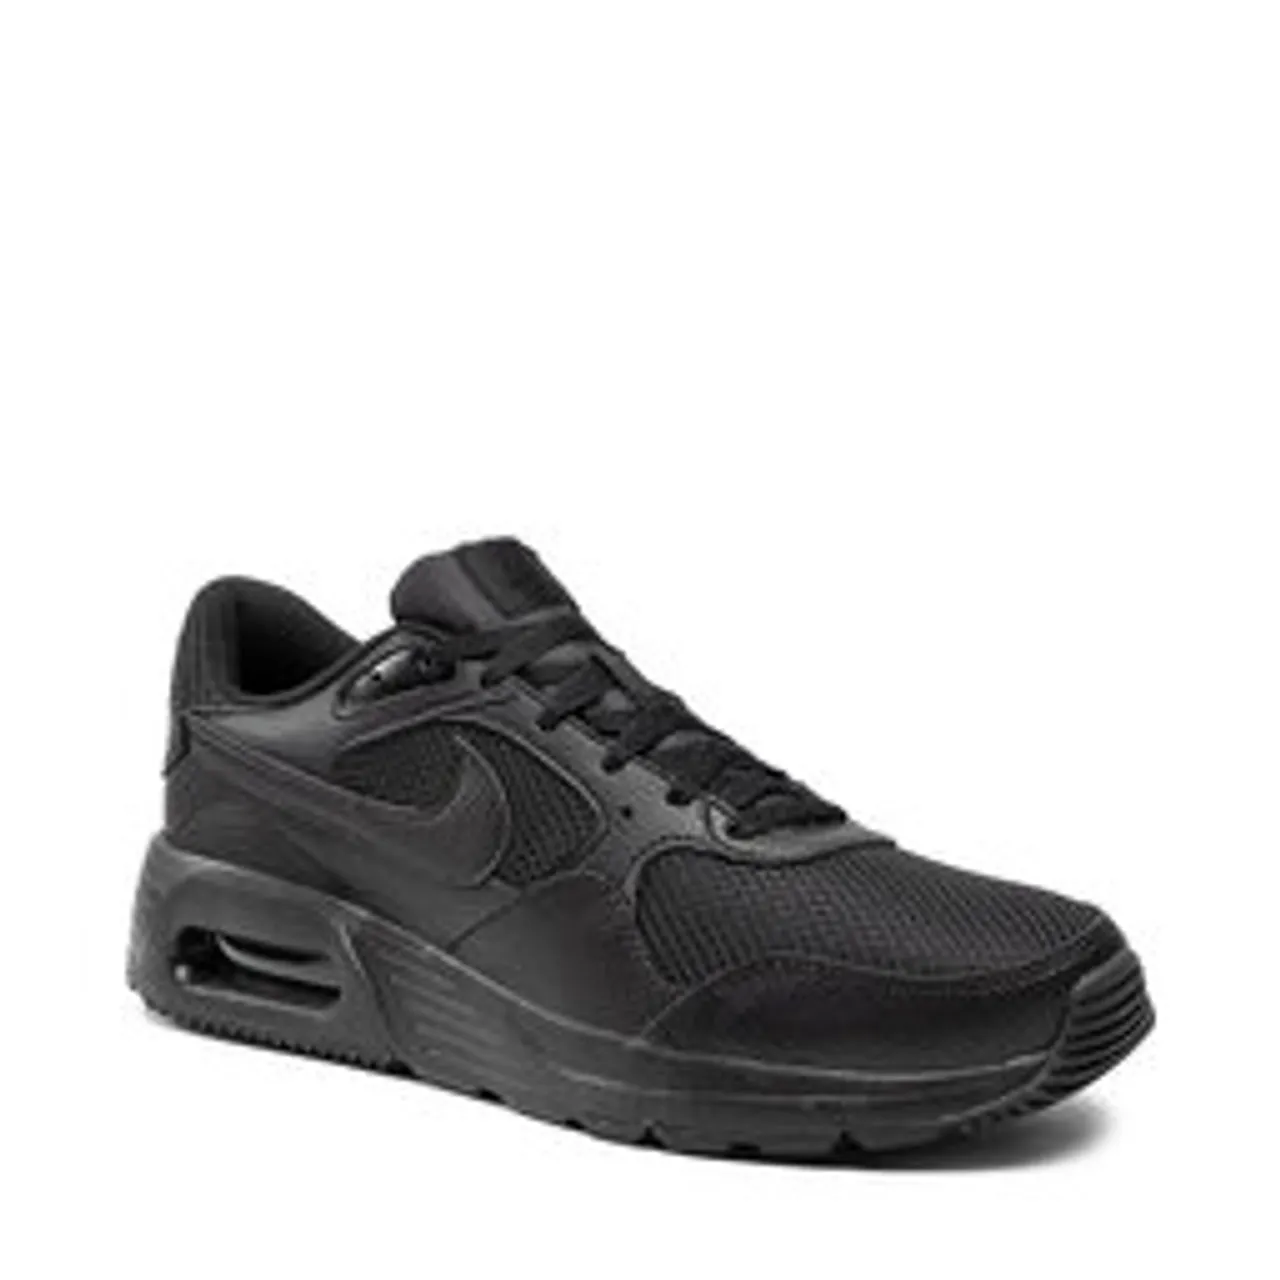 Schuhe Nike Air Max Sc CW4555 003 Black/Black/Black